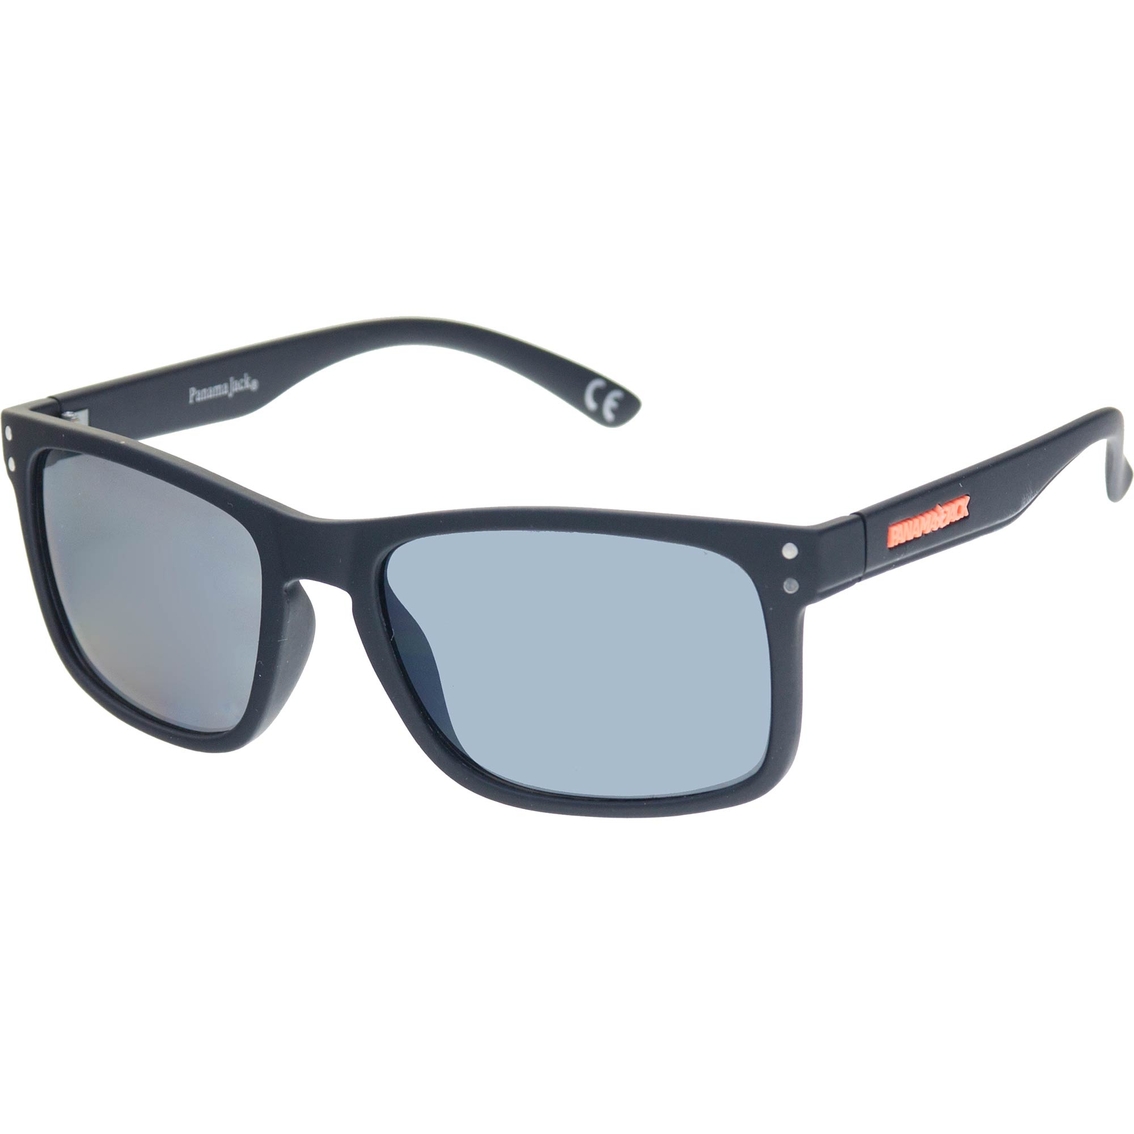 Foster Grant Panama Jack Black Wrap Sunglasses 10221868.cgr, Sunglasses, Clothing & Accessories